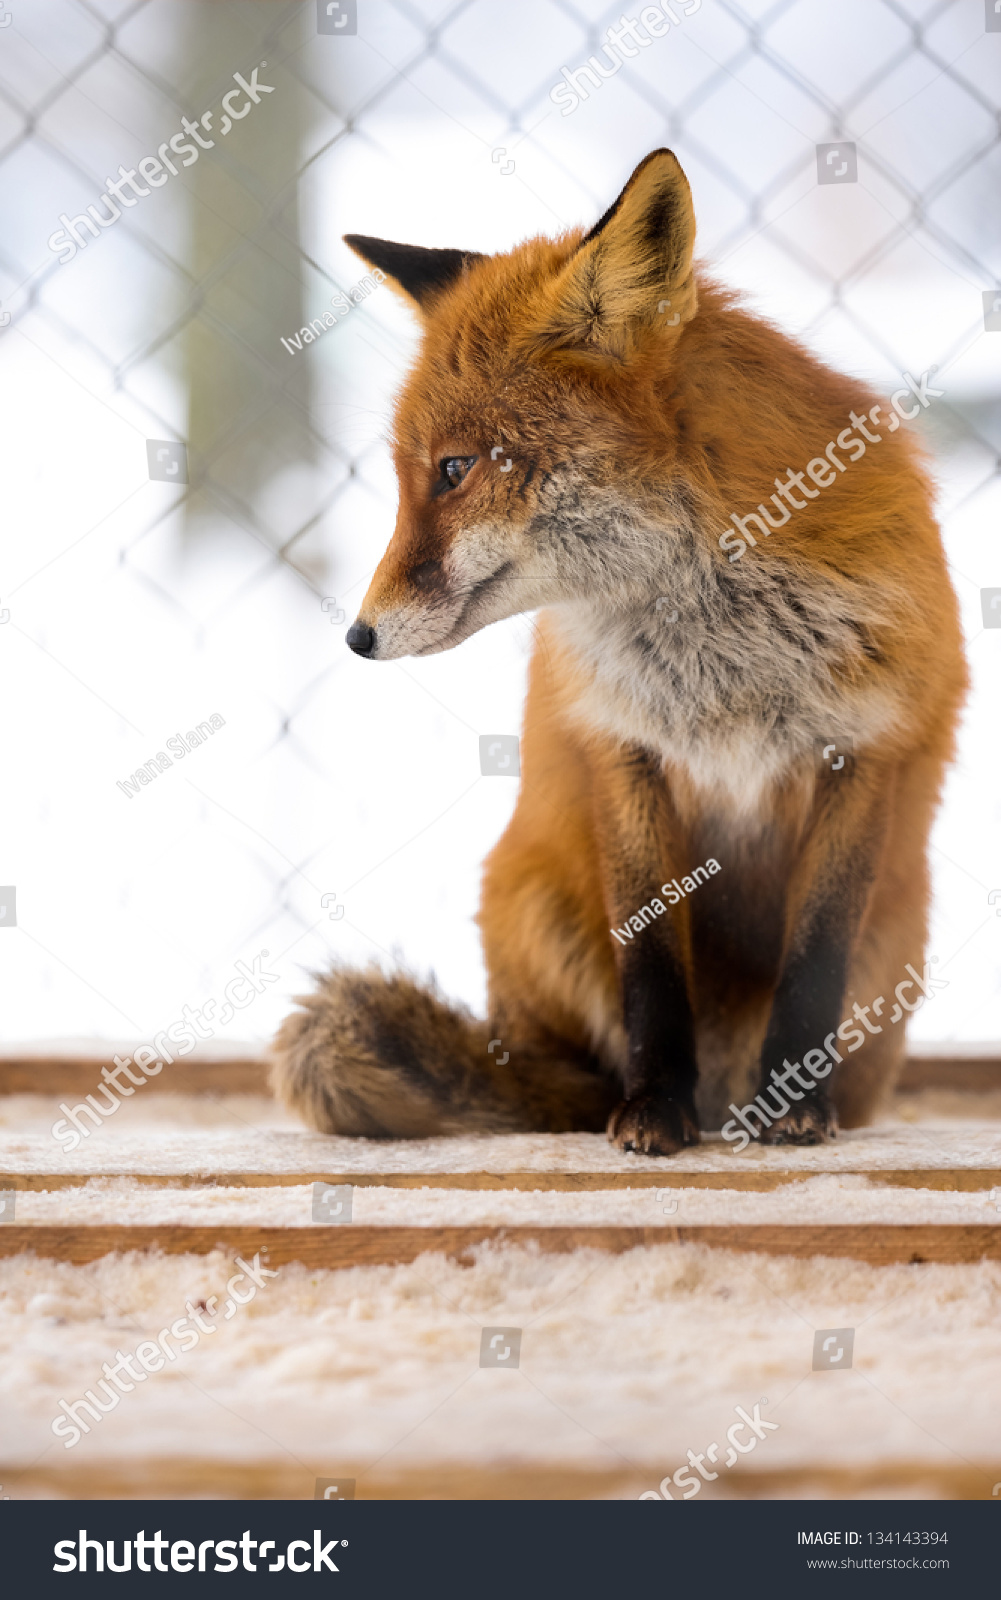 Redfox shelter fox procreate free